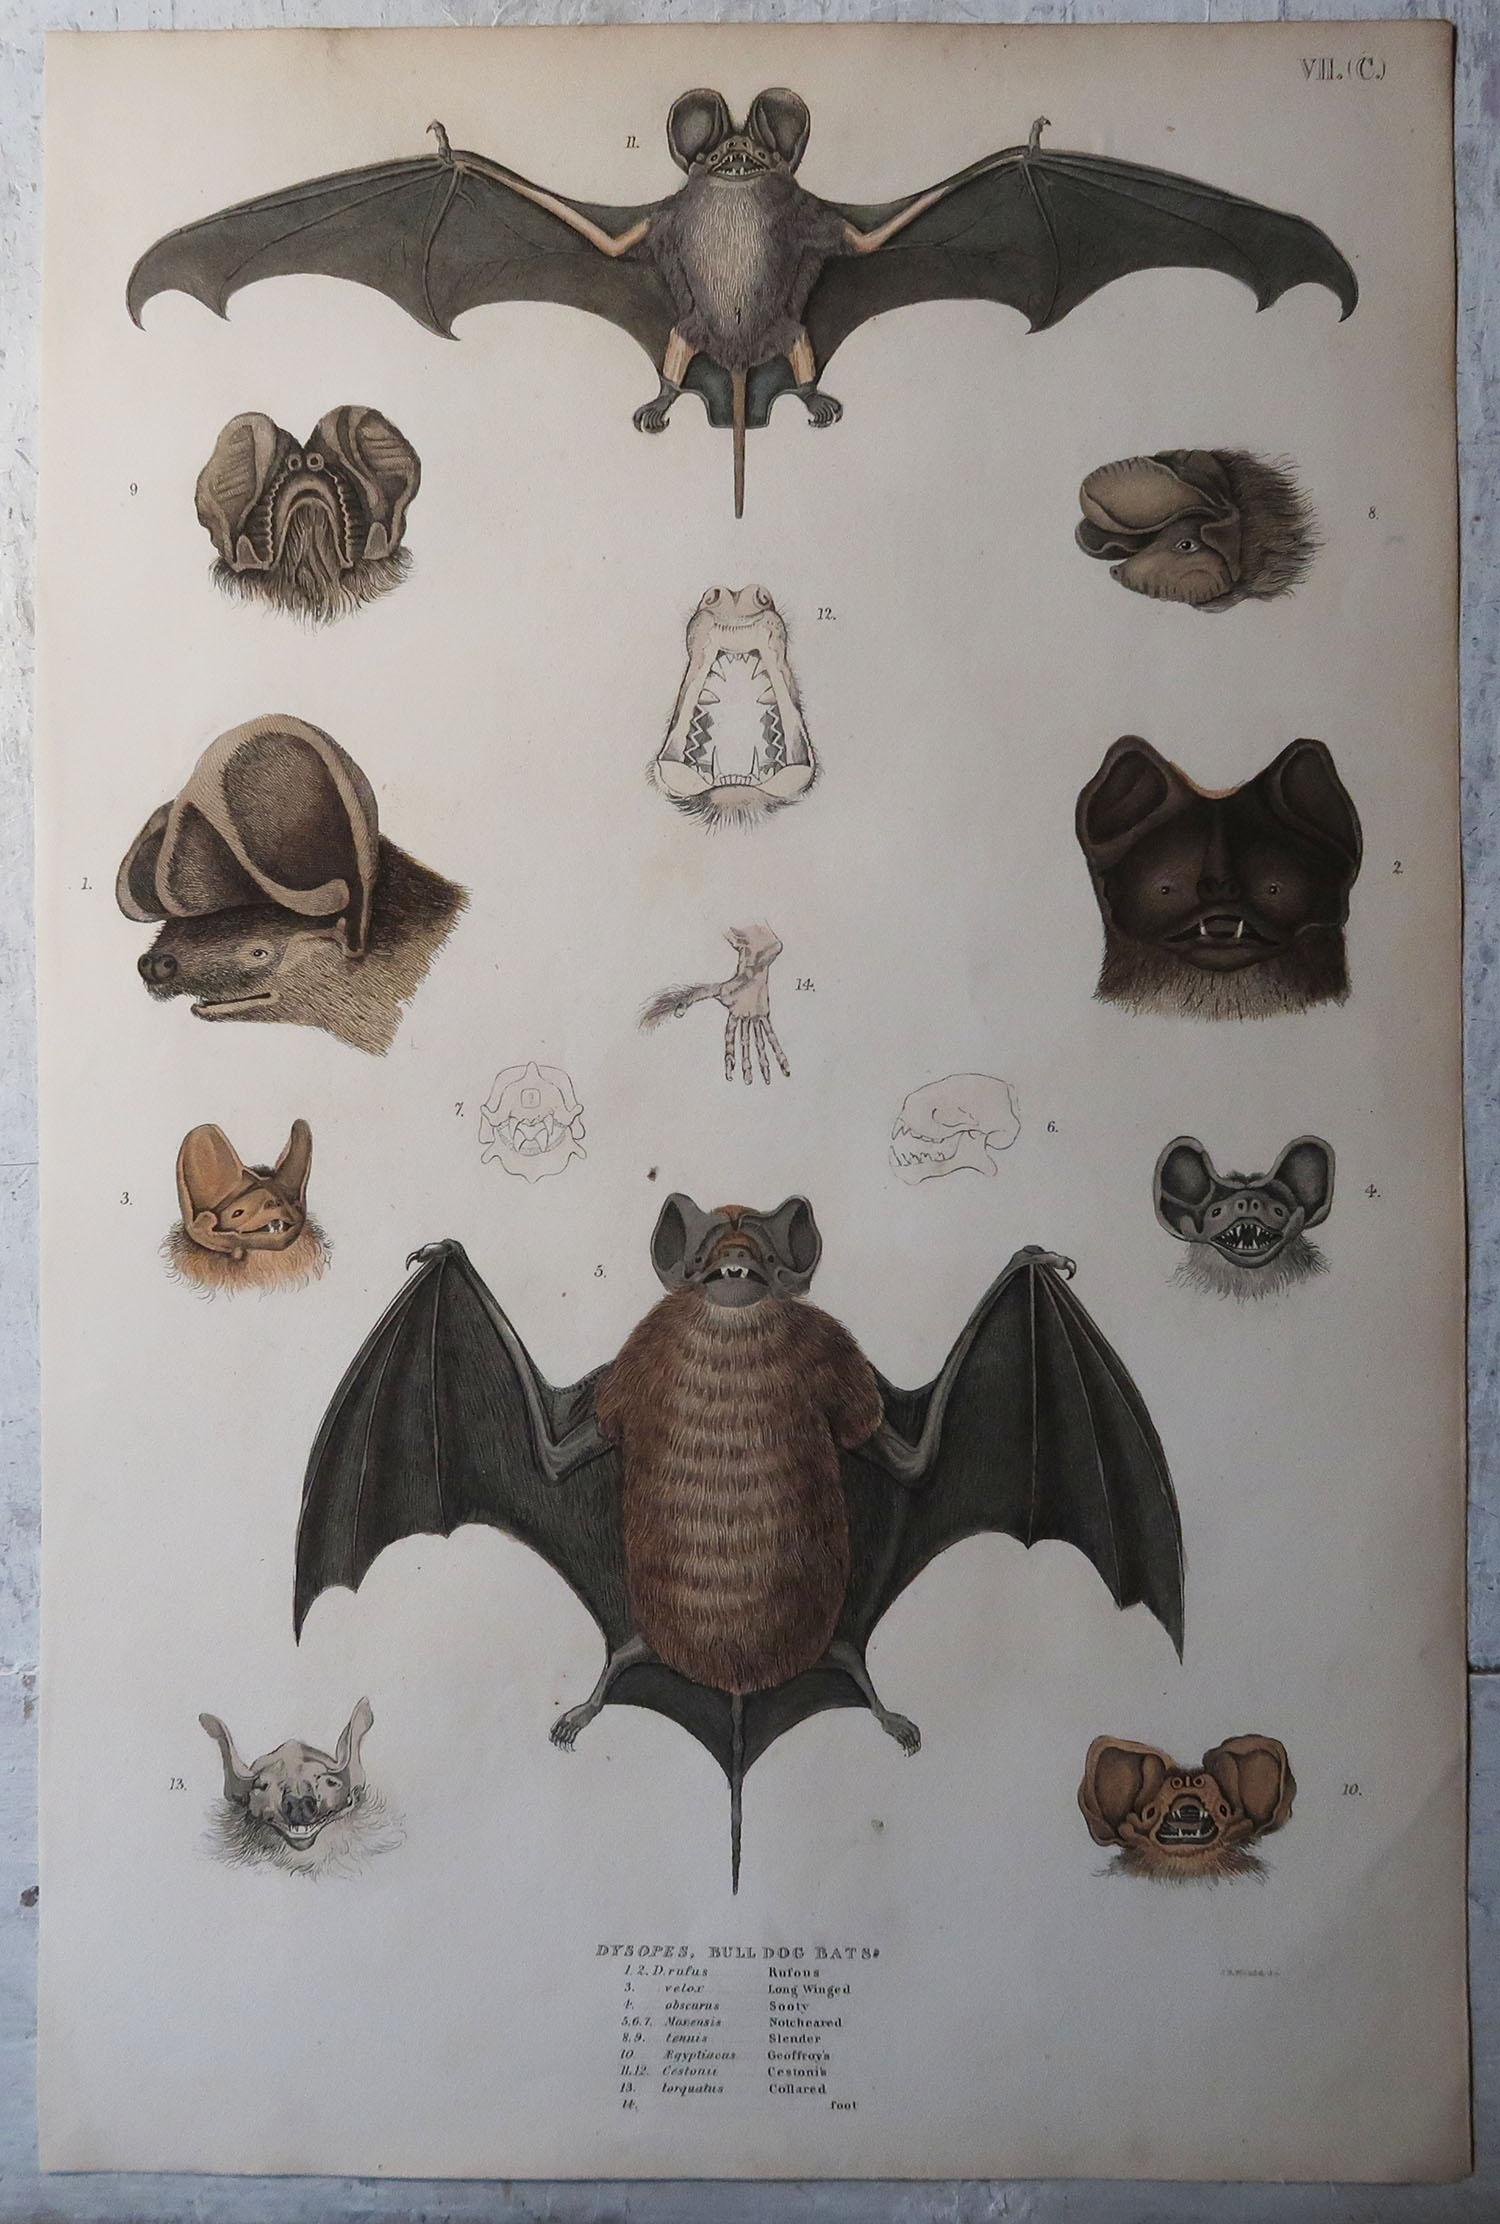 English Set of 4 Large Original Antique Natural History Prints, Bats, circa 1835